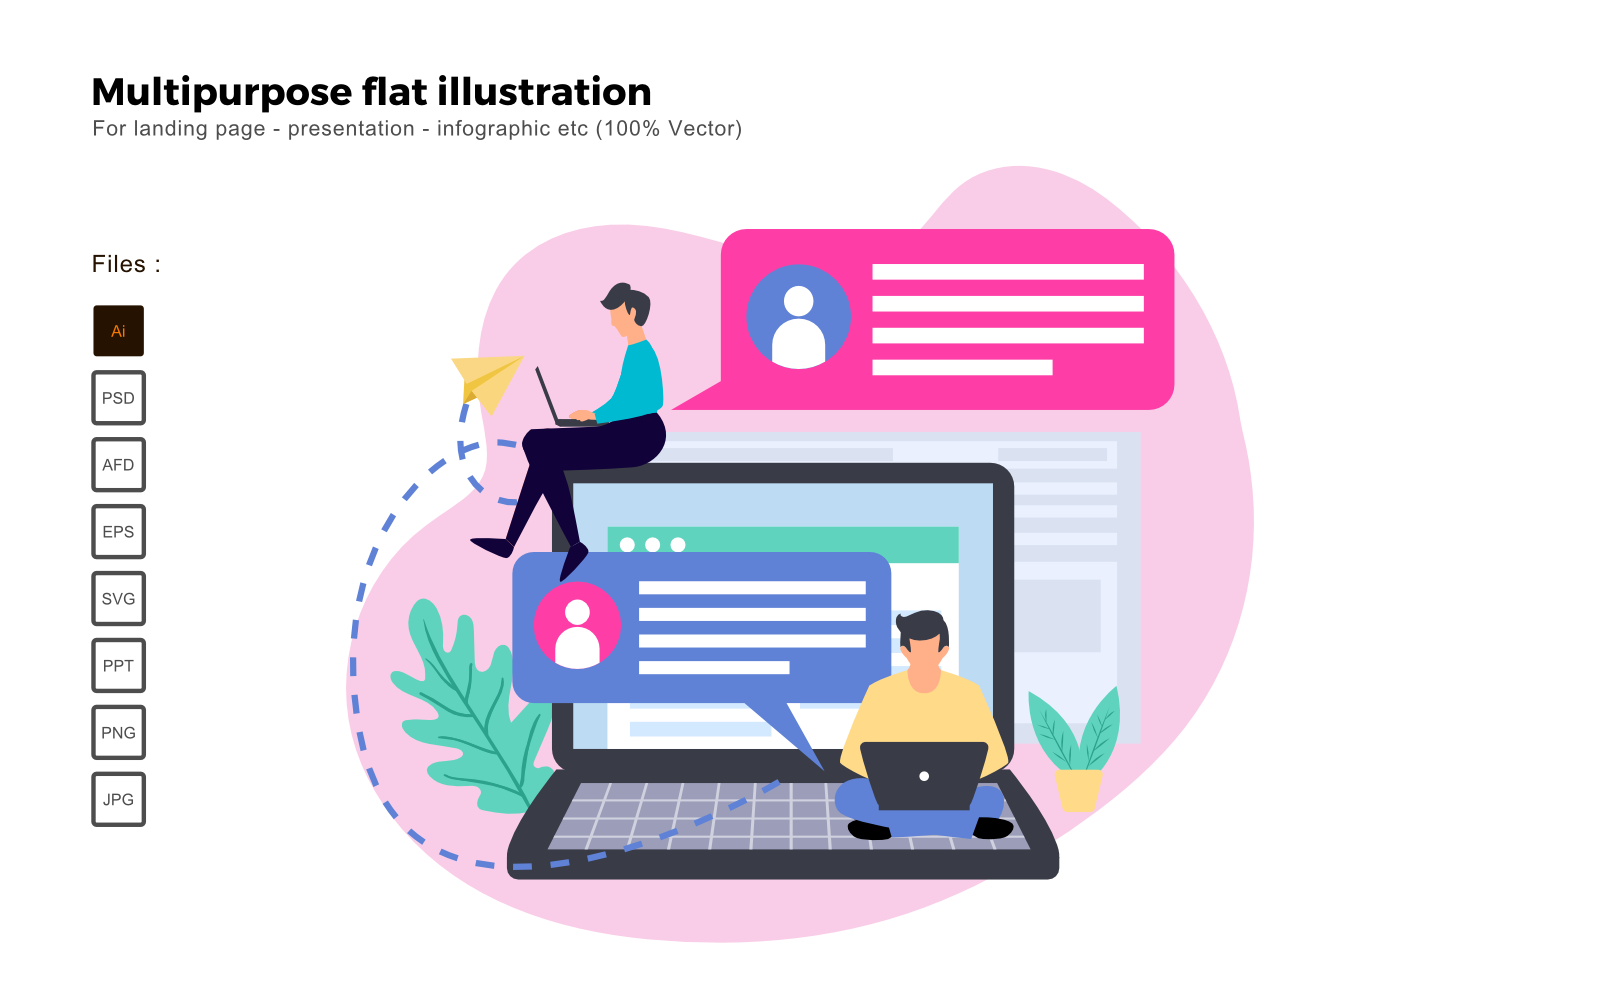 Multipurpose Flat Illustration Chatting - Vector Image